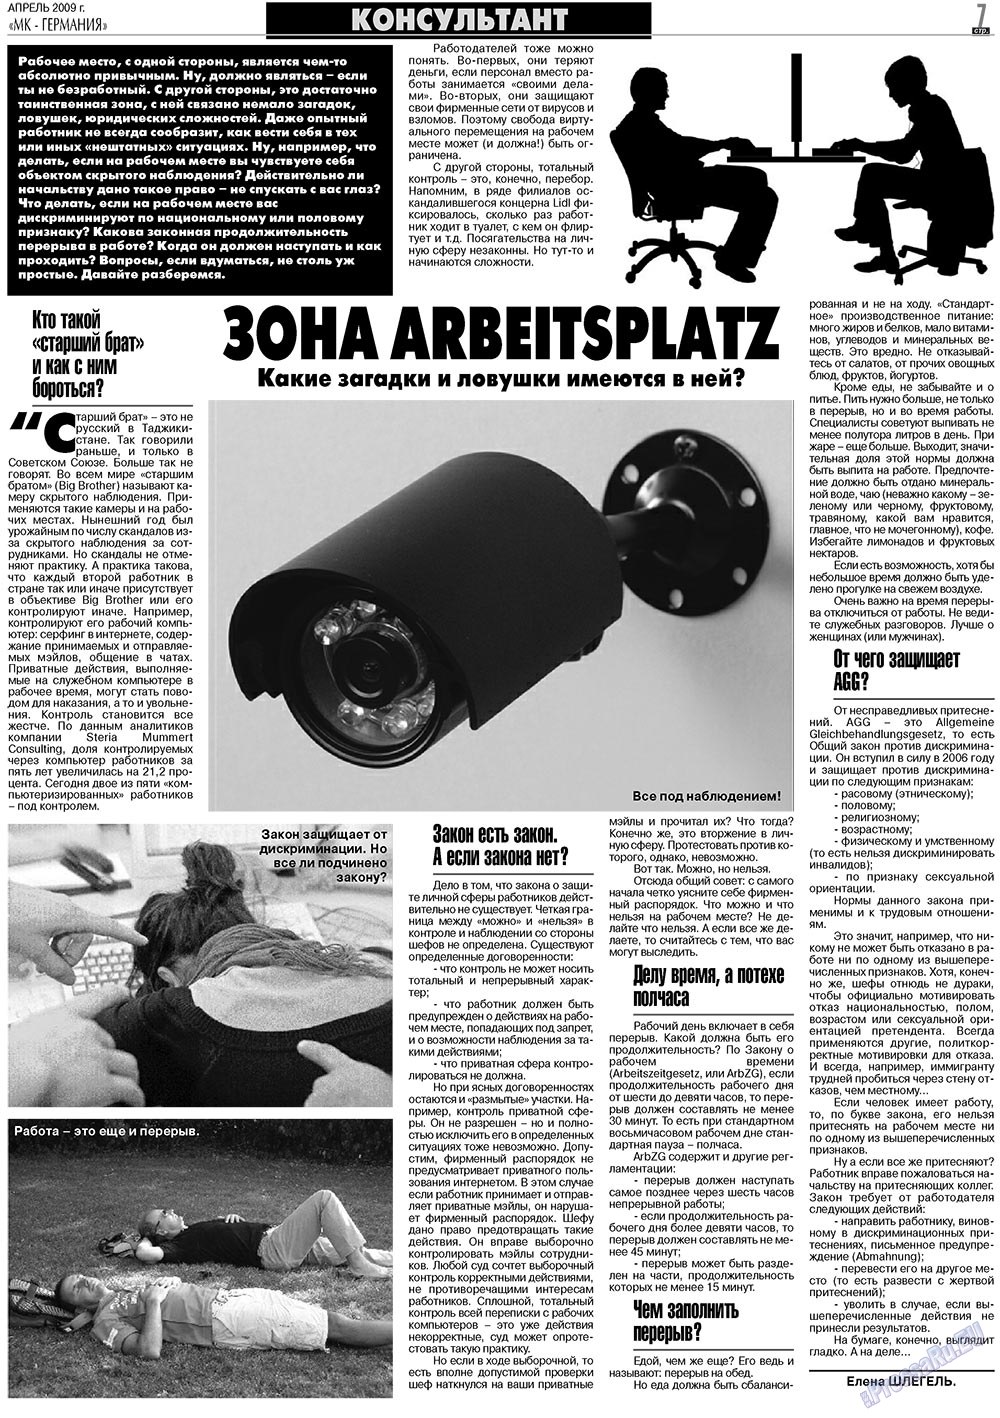 МК-Германия планета мнений, газета. 2009 №4 стр.7